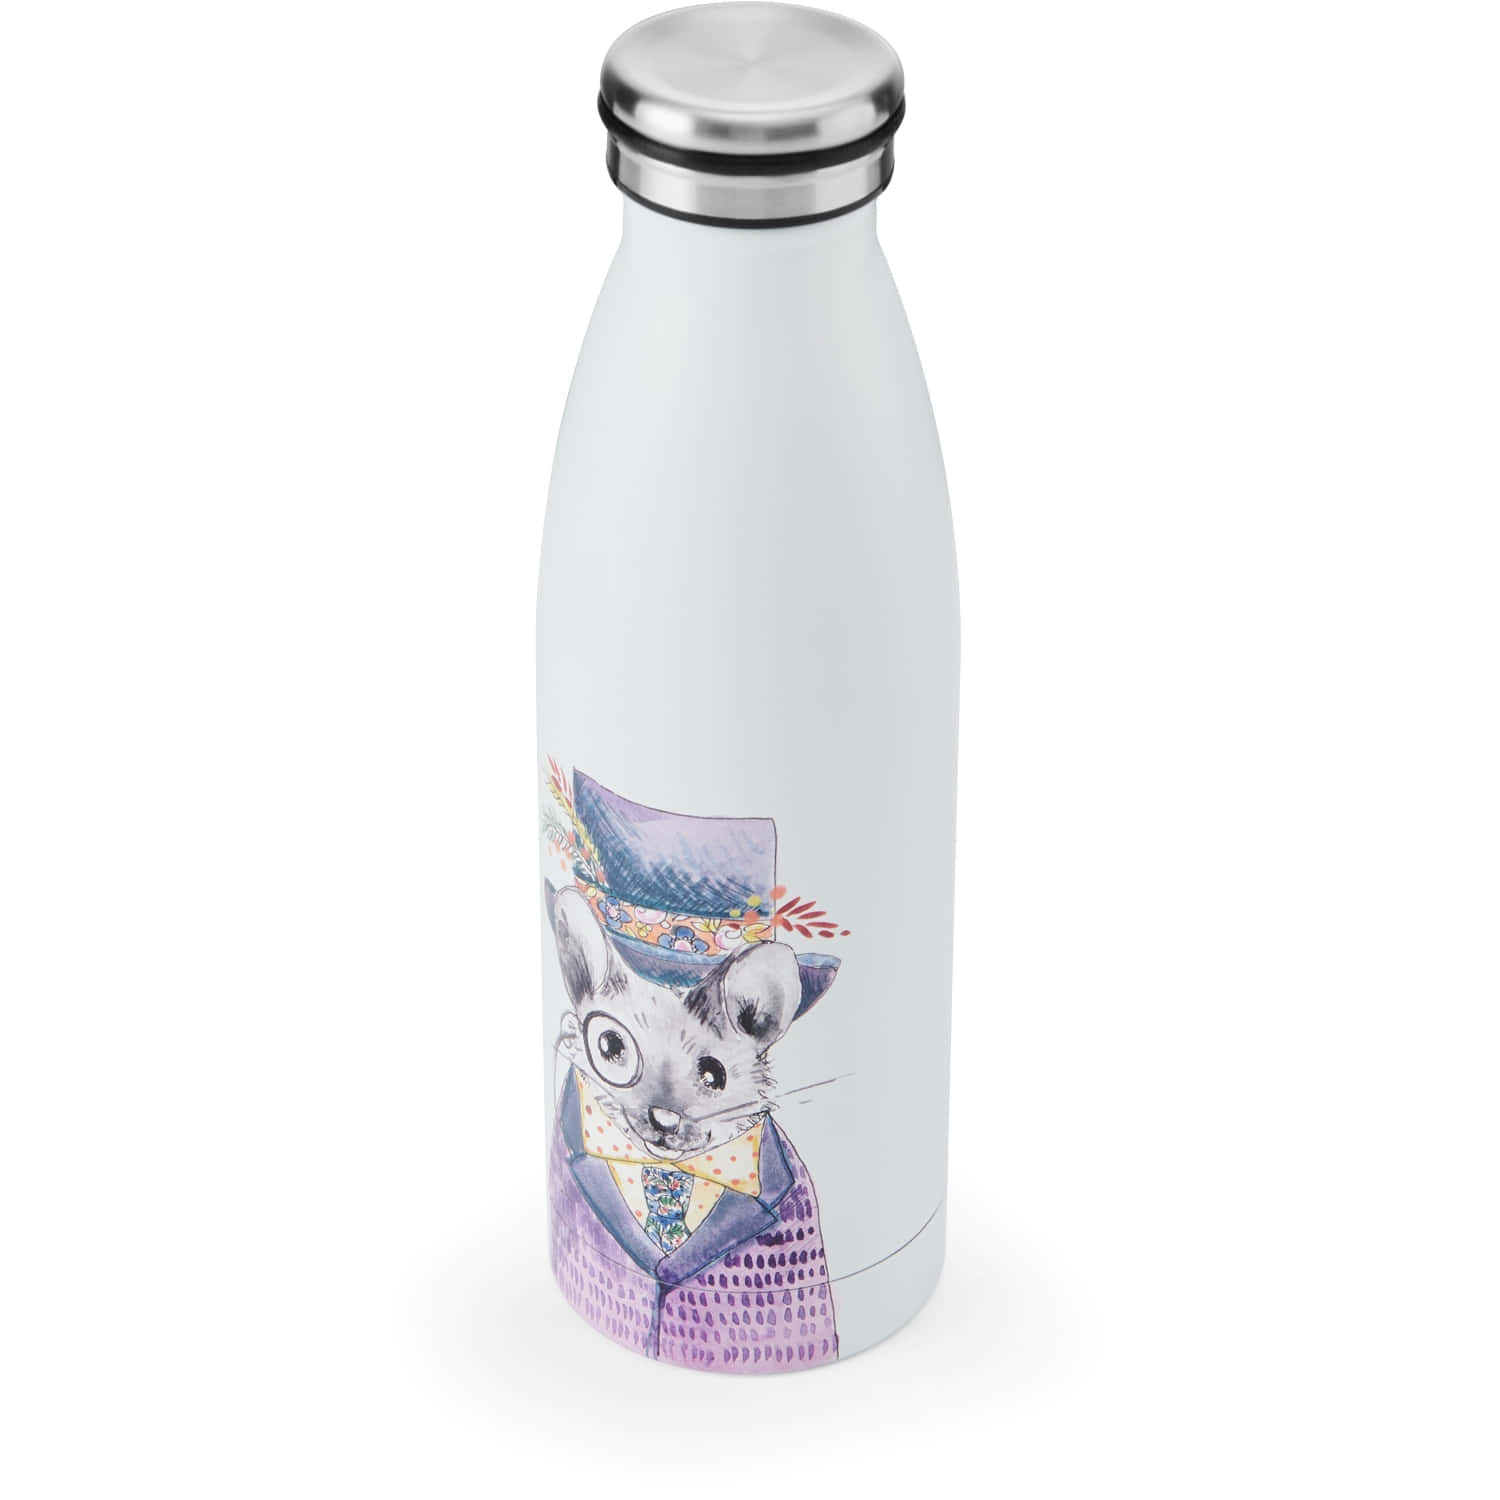 Mikasa x Tipperleyhill 500ml Water Bottle Mouse